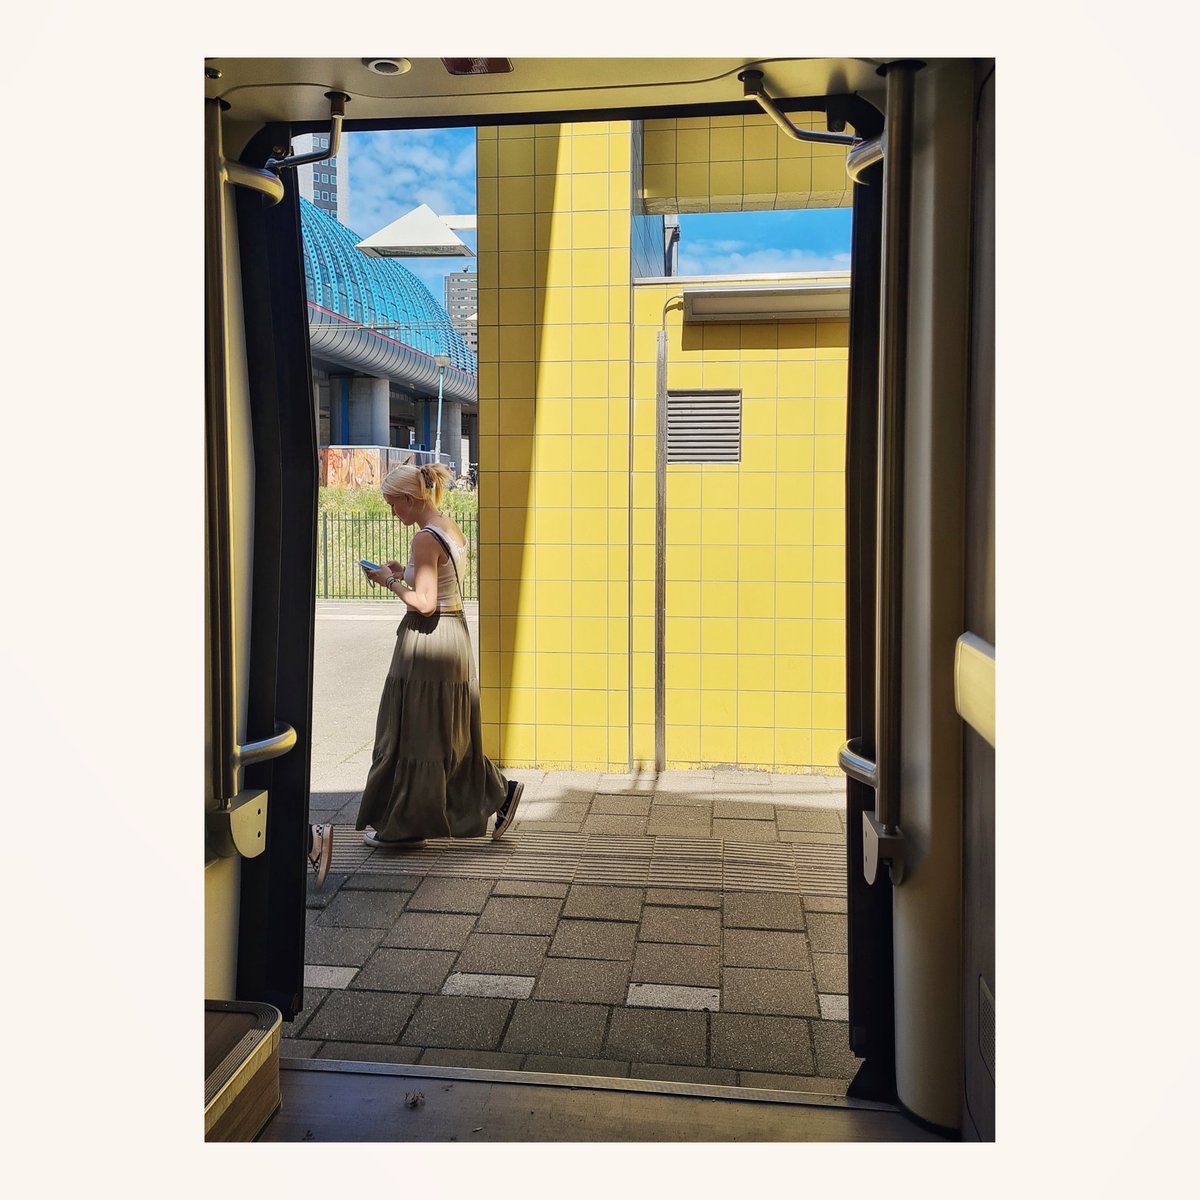 Treinzicht. 
.
#treinzicht #fromthetrain #sloterdijk #yellow #blue #woman #ns #nederlandsespoorwegen #station #stationsloterdijk